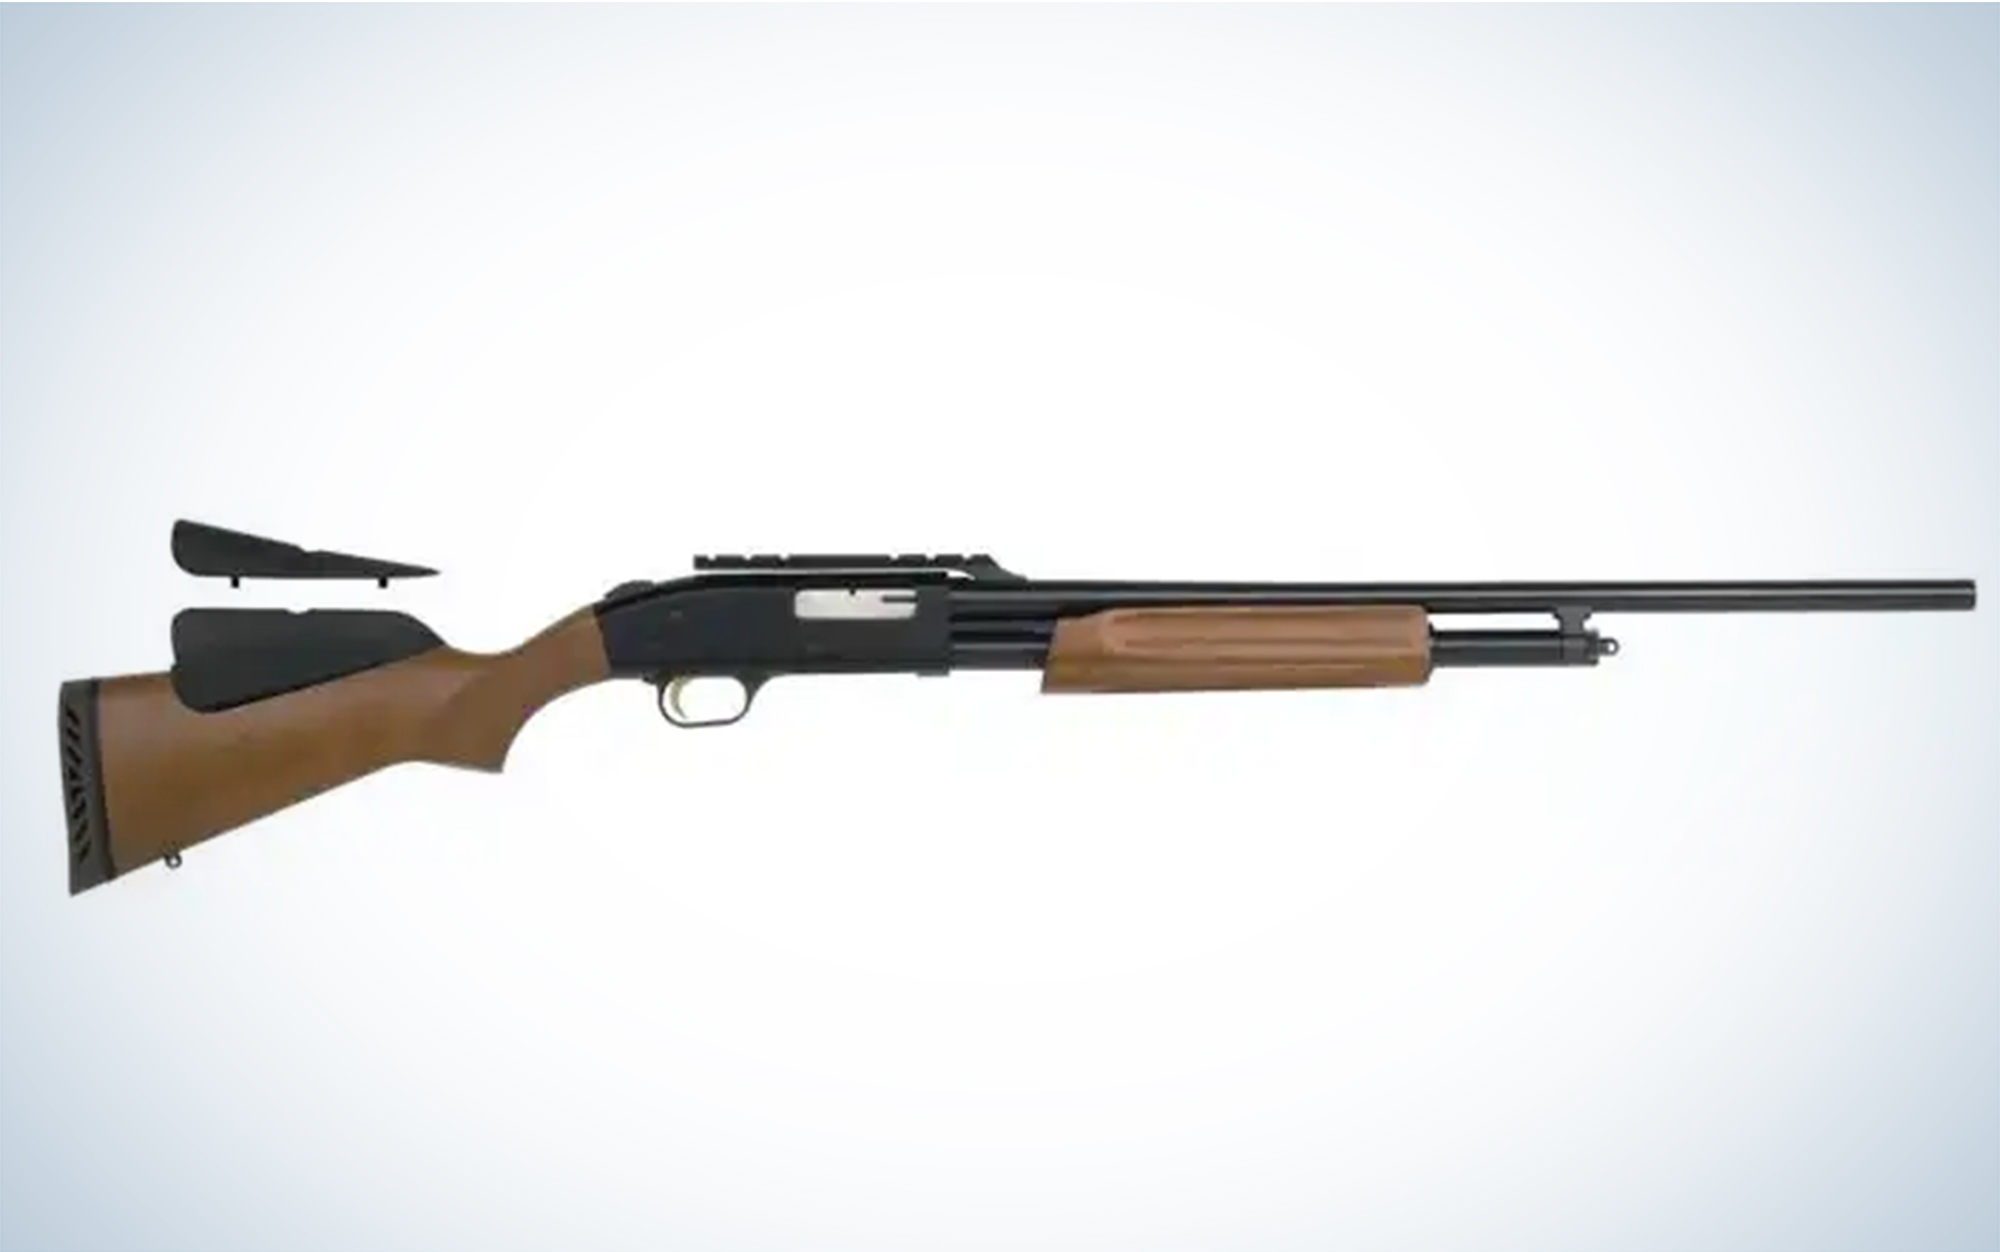 The Mossberg Slugster is a deer hunting shotgun.